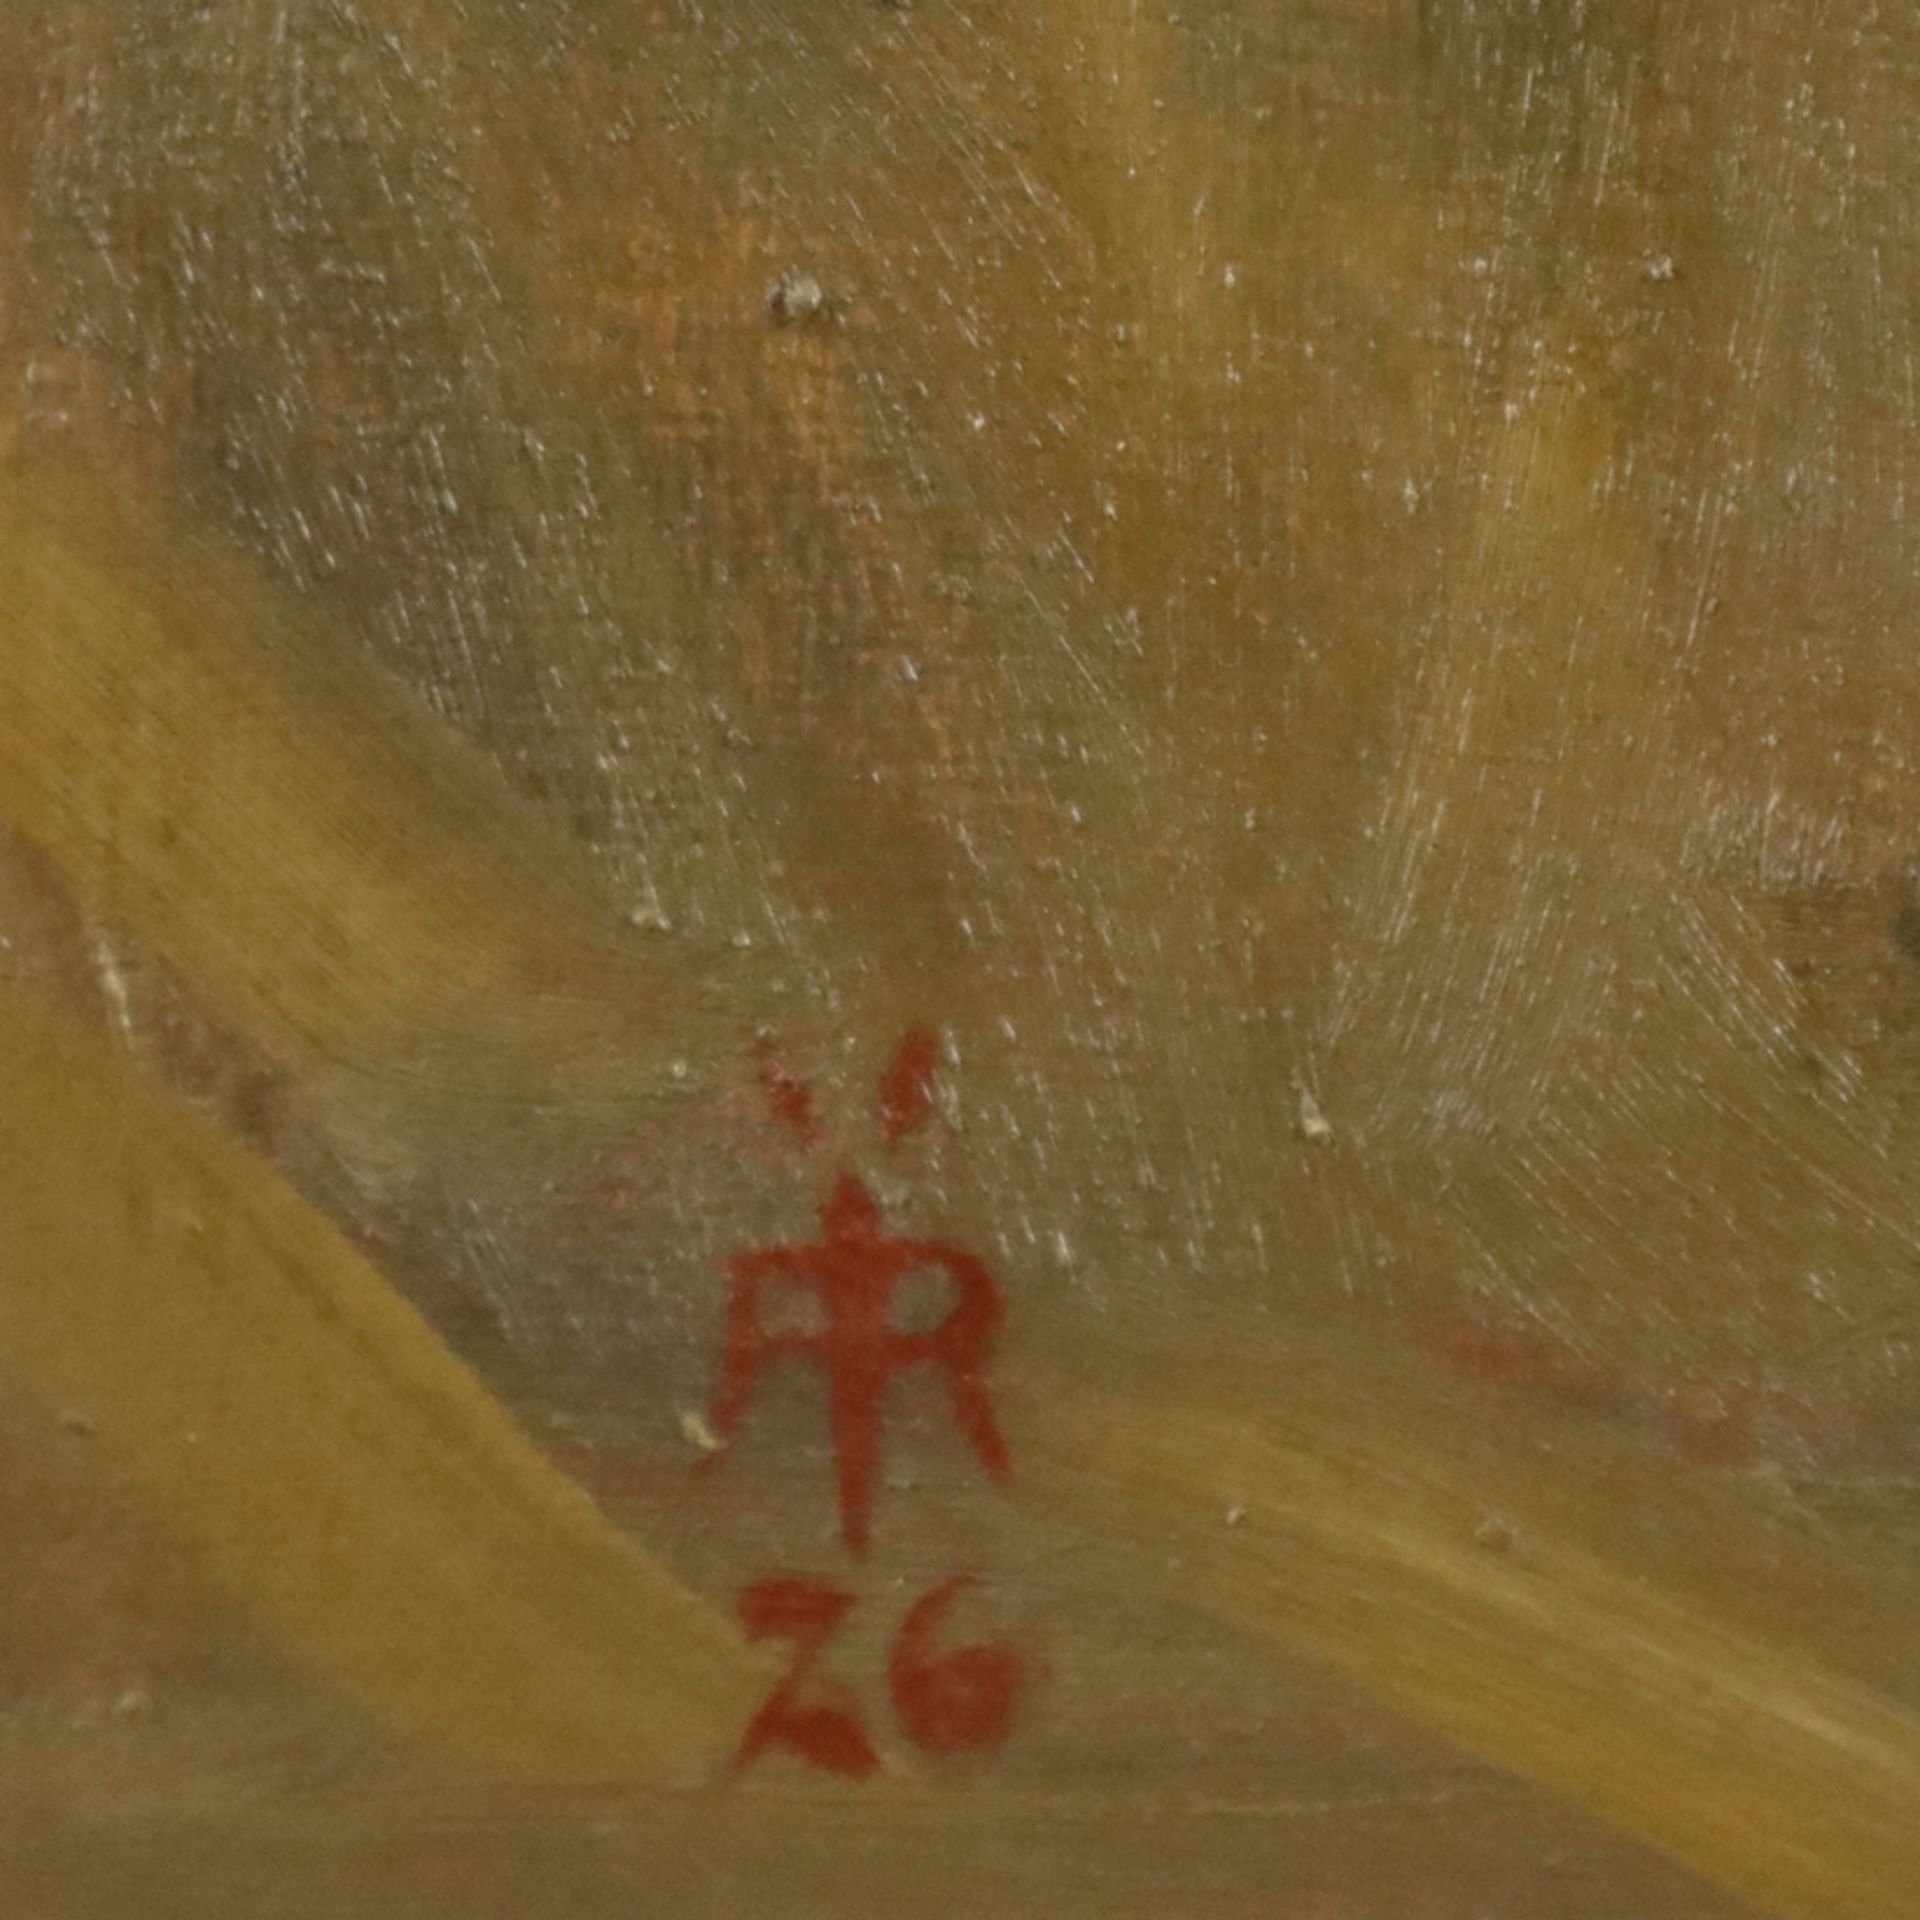 Monogrammist "AR" (tätig 1. Hälfte 20. Jh.) - Jungenportrait, 1926, Öl auf Leinwand, unten links mo - Image 9 of 12